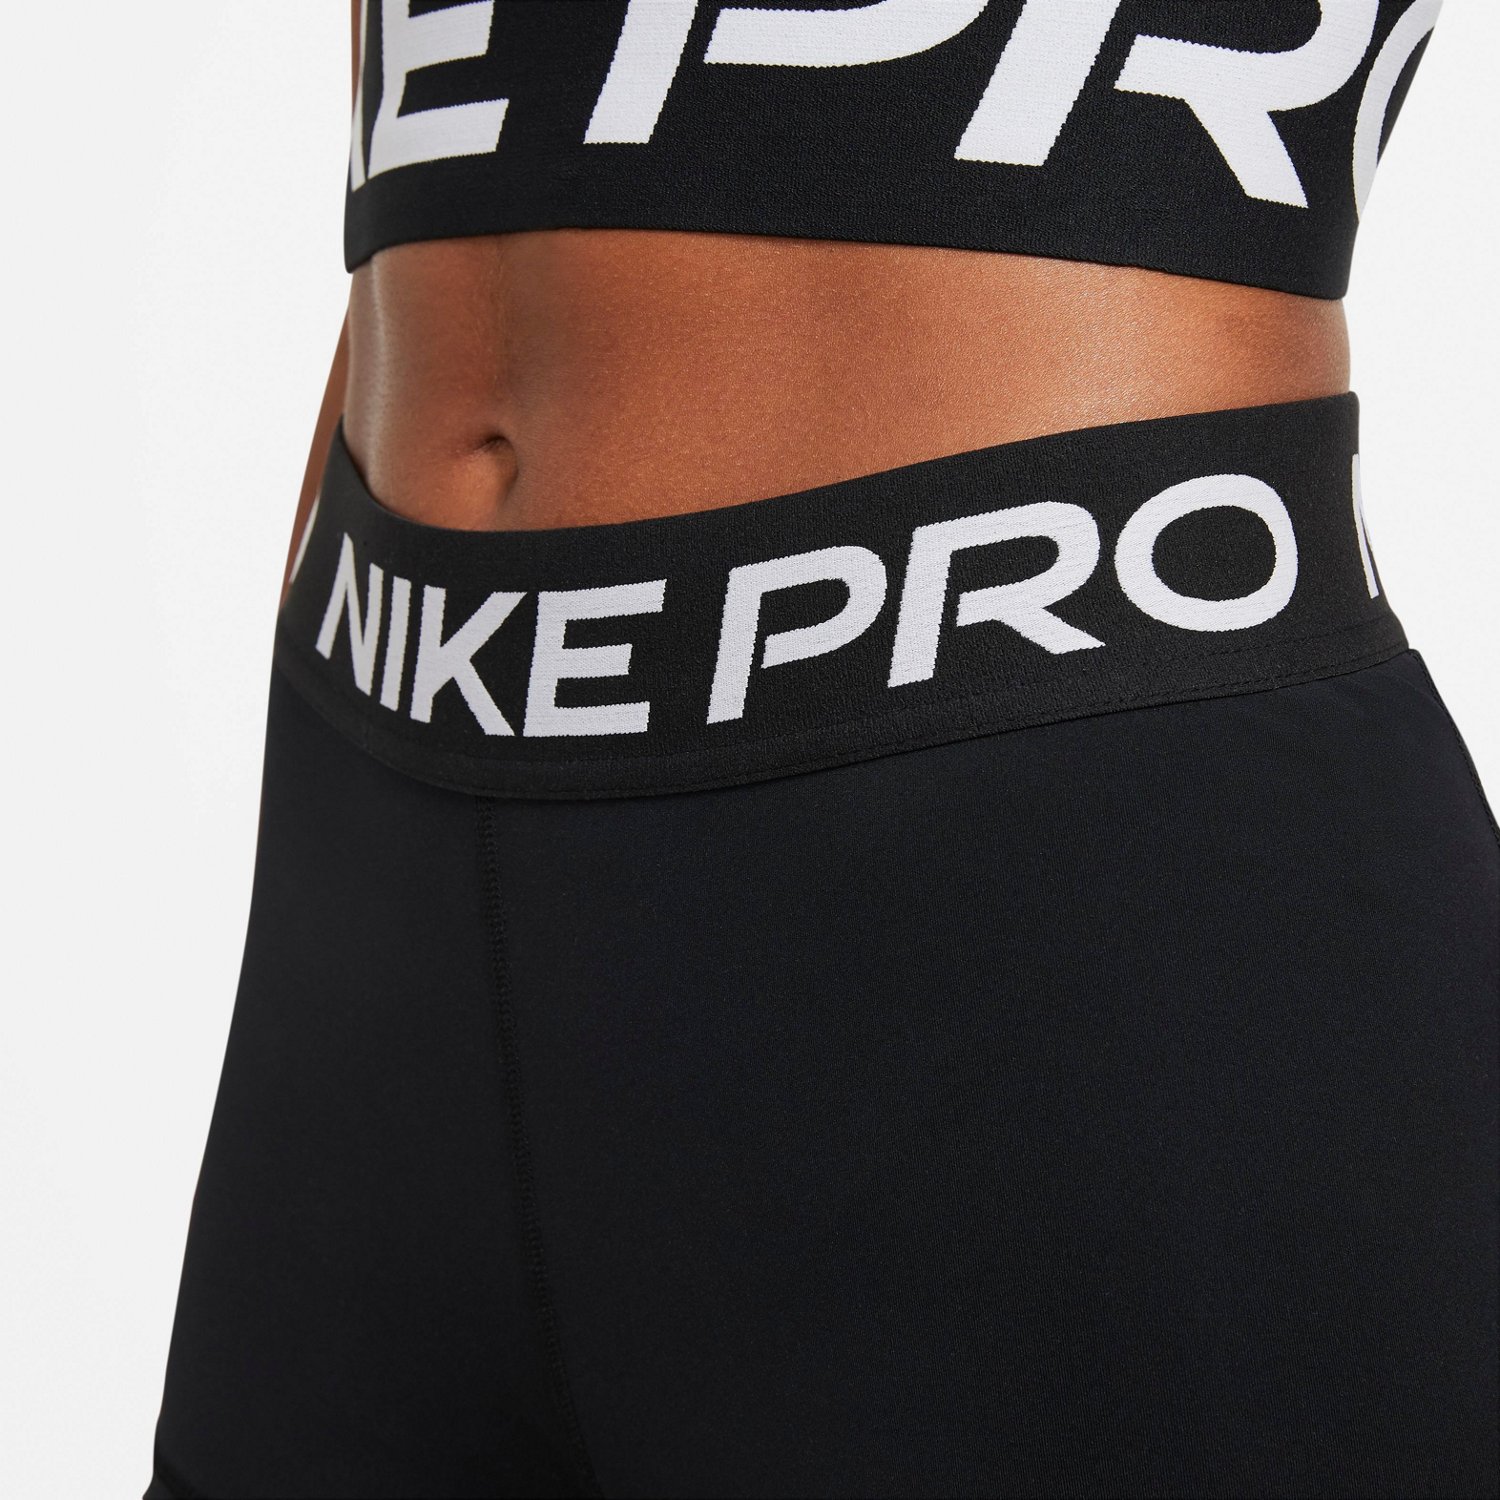 Nike Women's Pro 365 3 Shorts DH4863 010 Black/White/Grey Size Medium 